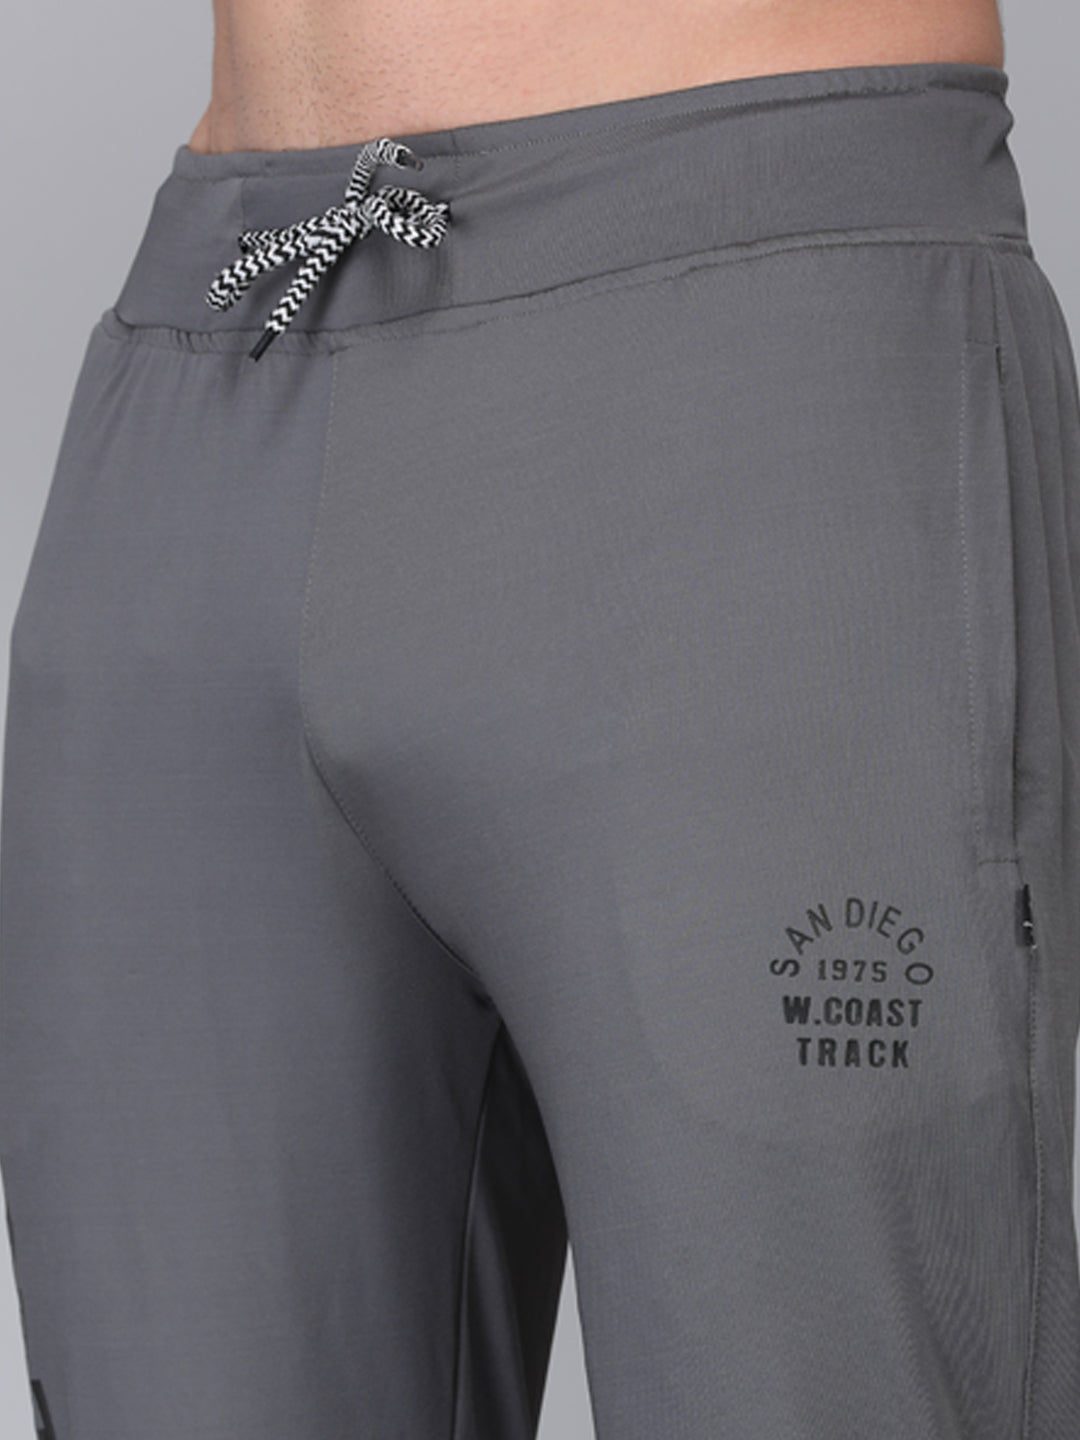 White Moon Men's Dryfit Lower Lycra Track pants (Grey) whitemoon.in